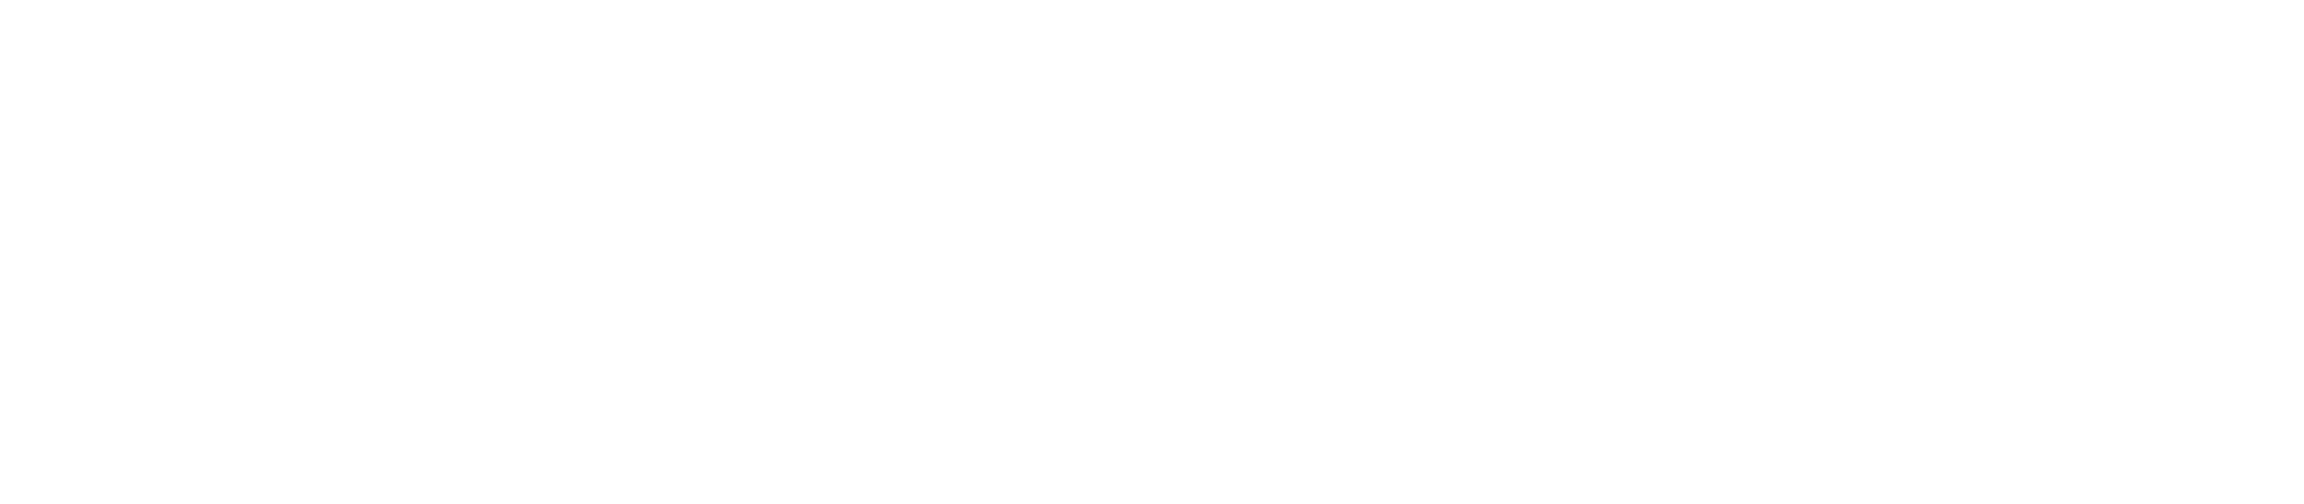 Creek Transport ISO Certified Logos